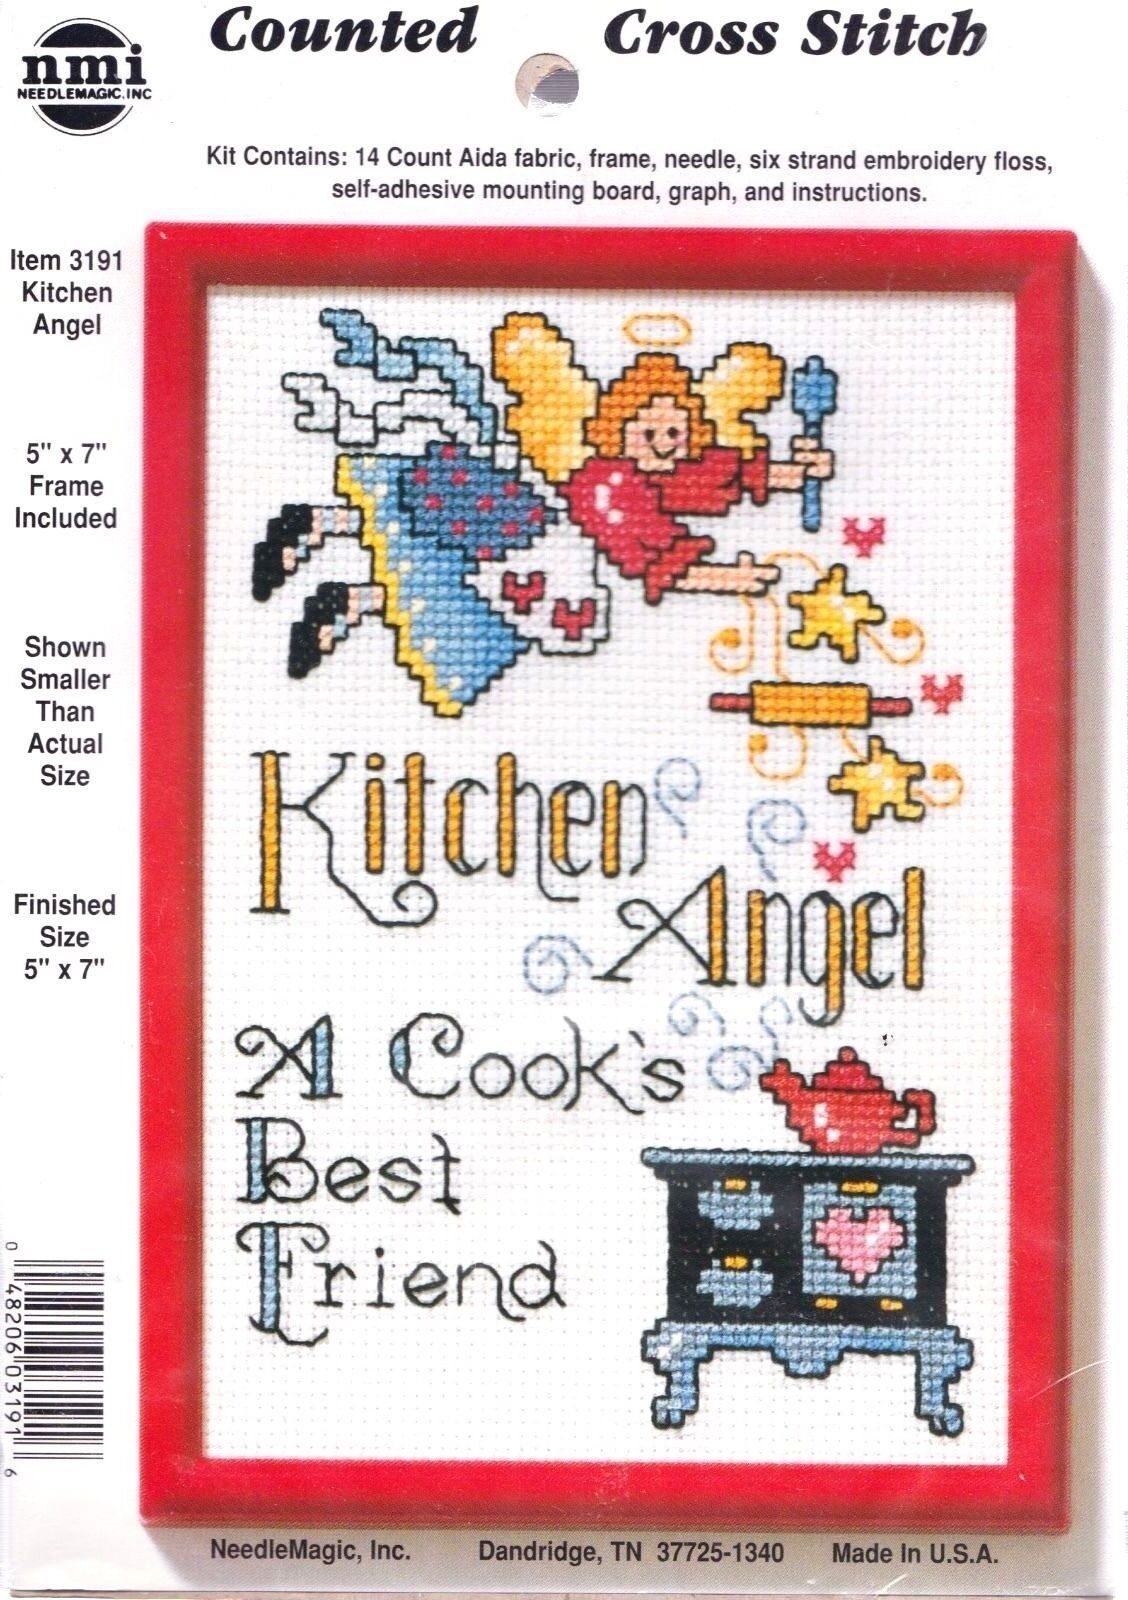 DIY Needle Magic Kitchen Angel Counted Cross Stitch Kit